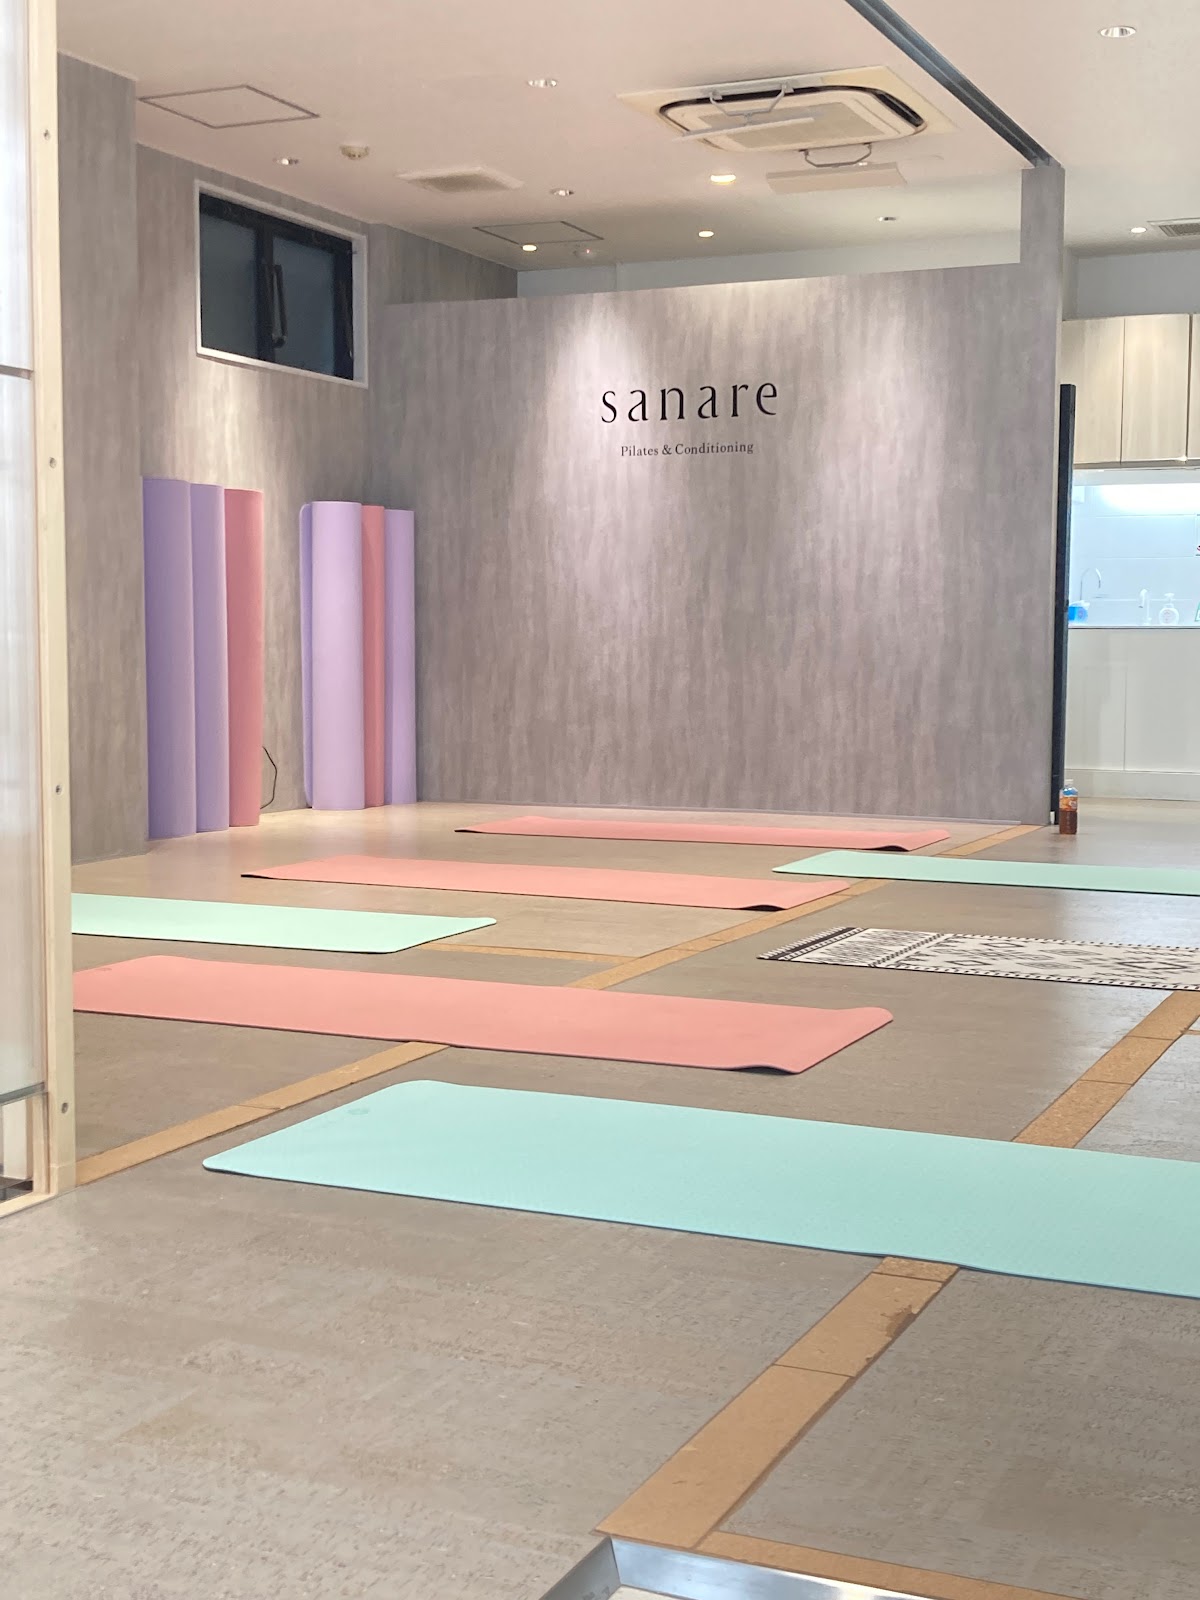 sanare Pilates＆Conditioning 東京飯田橋店の写真